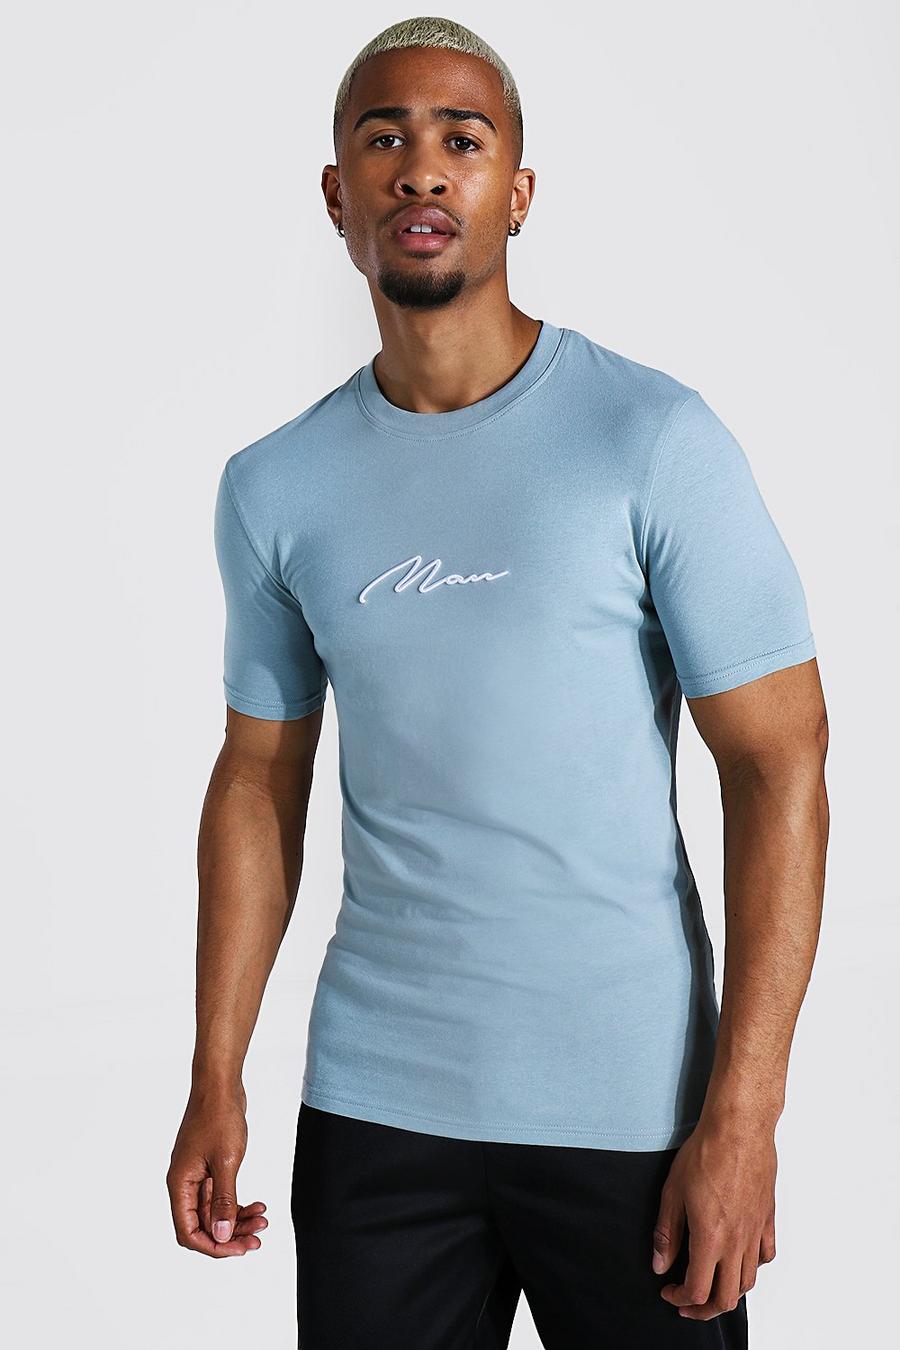 Camiseta bordada con firma MAN ajustada al músculo, Dusty blue image number 1